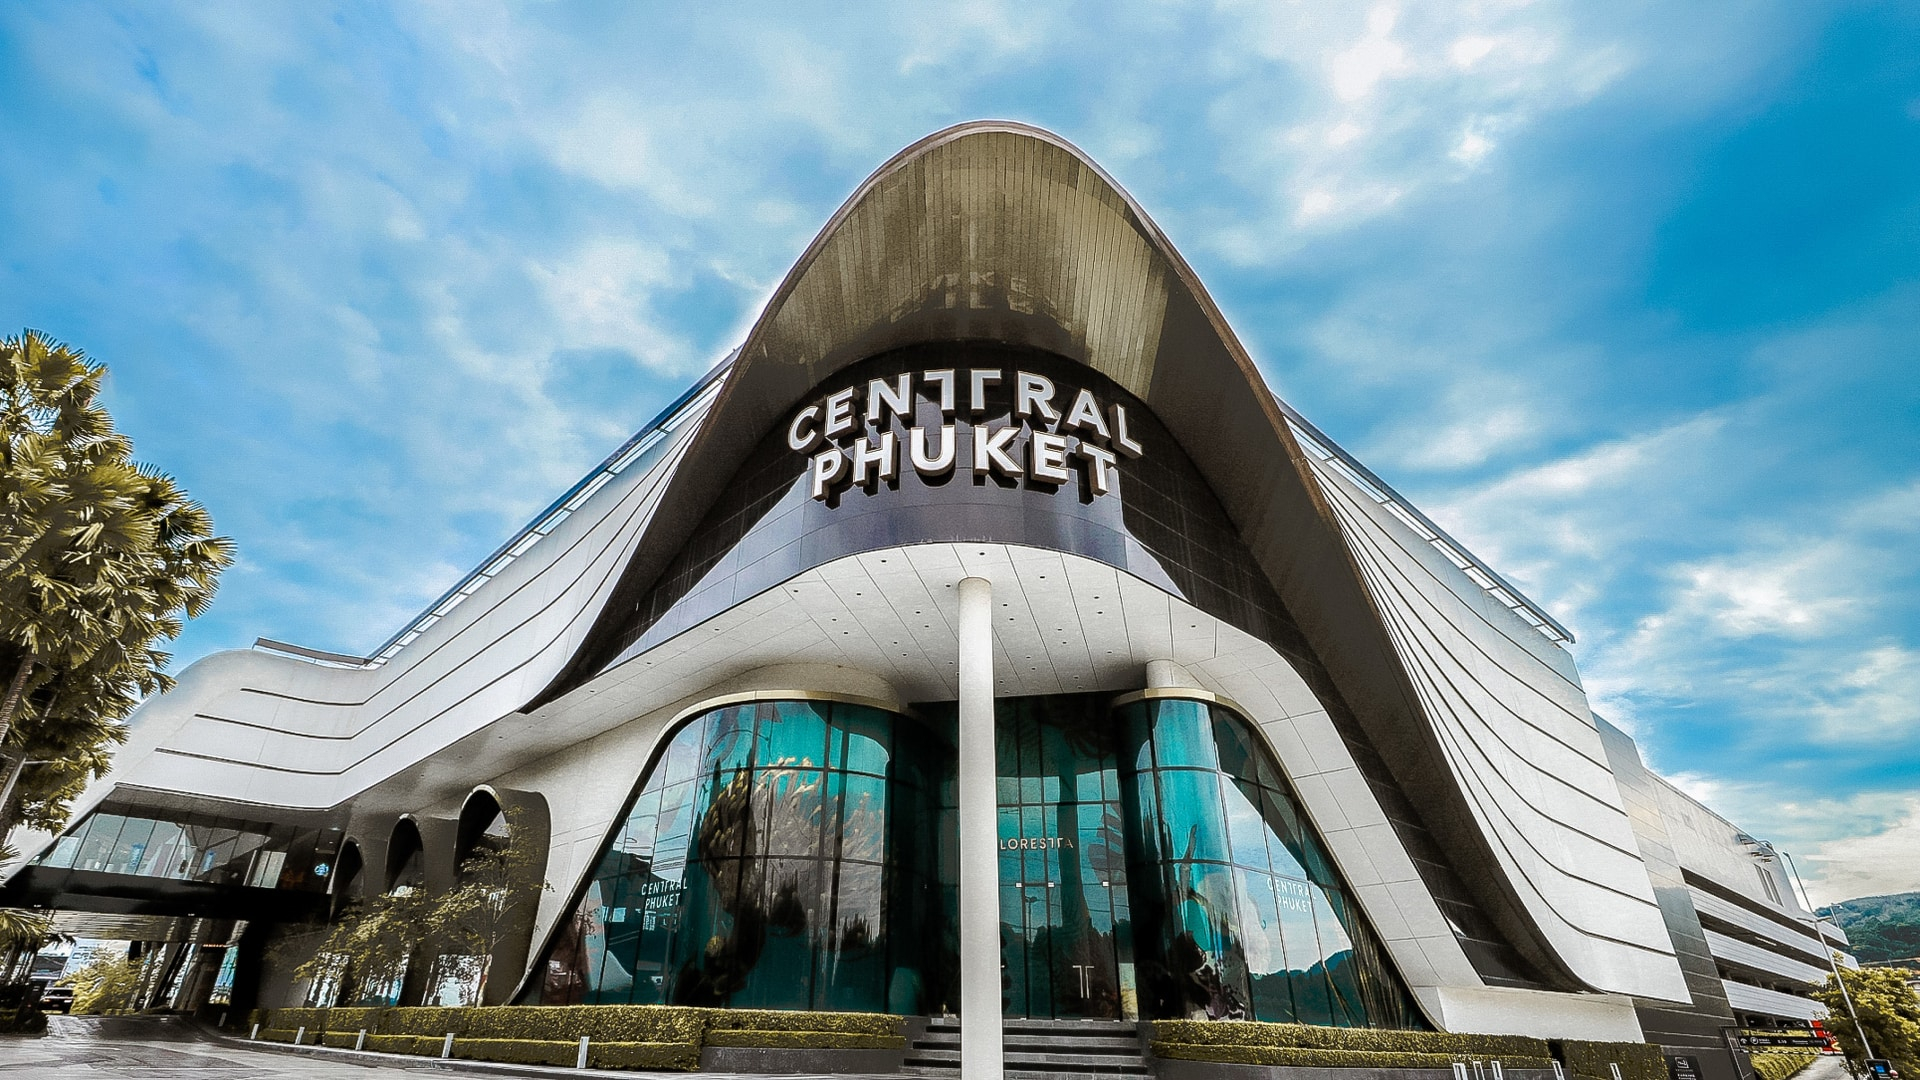 Central Phuket - The Island's Premier Shopping Destination